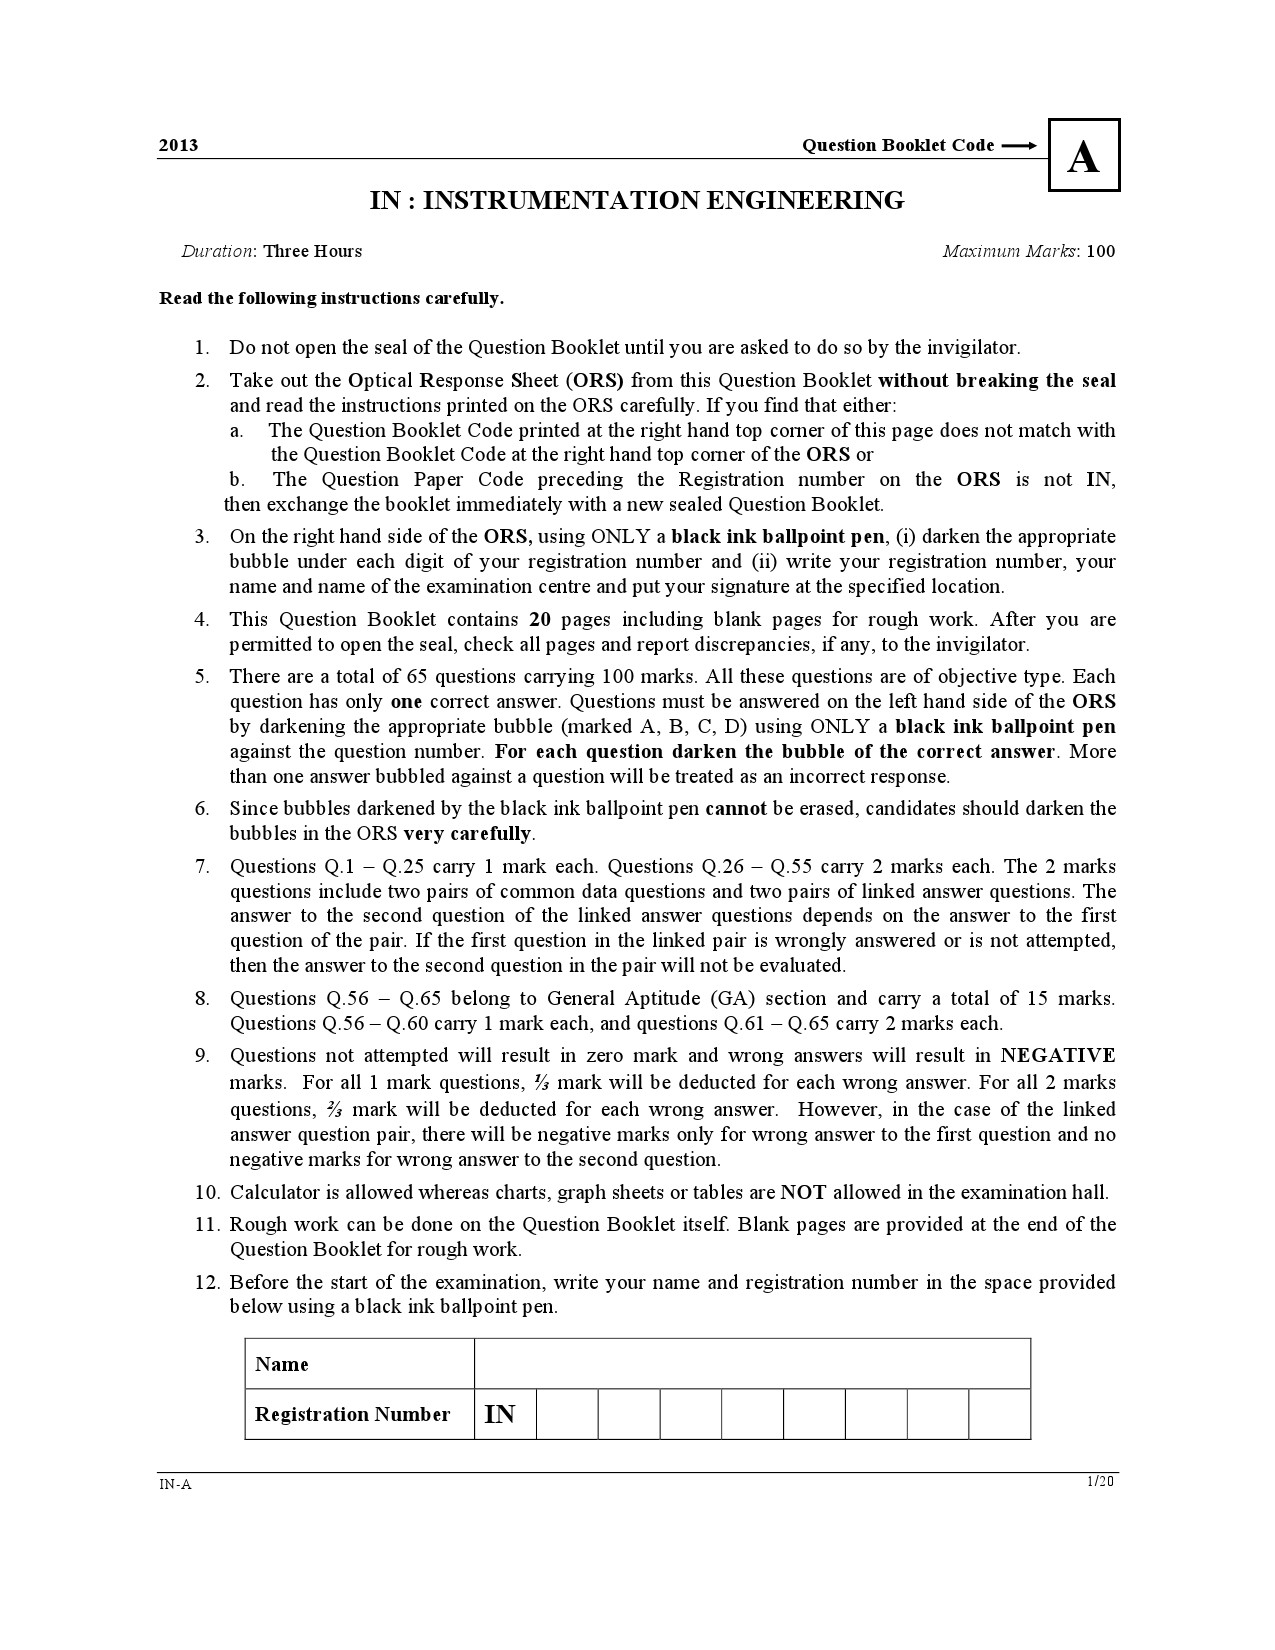 GATE Exam Question Paper 2013 Instrumentation Engineering 1